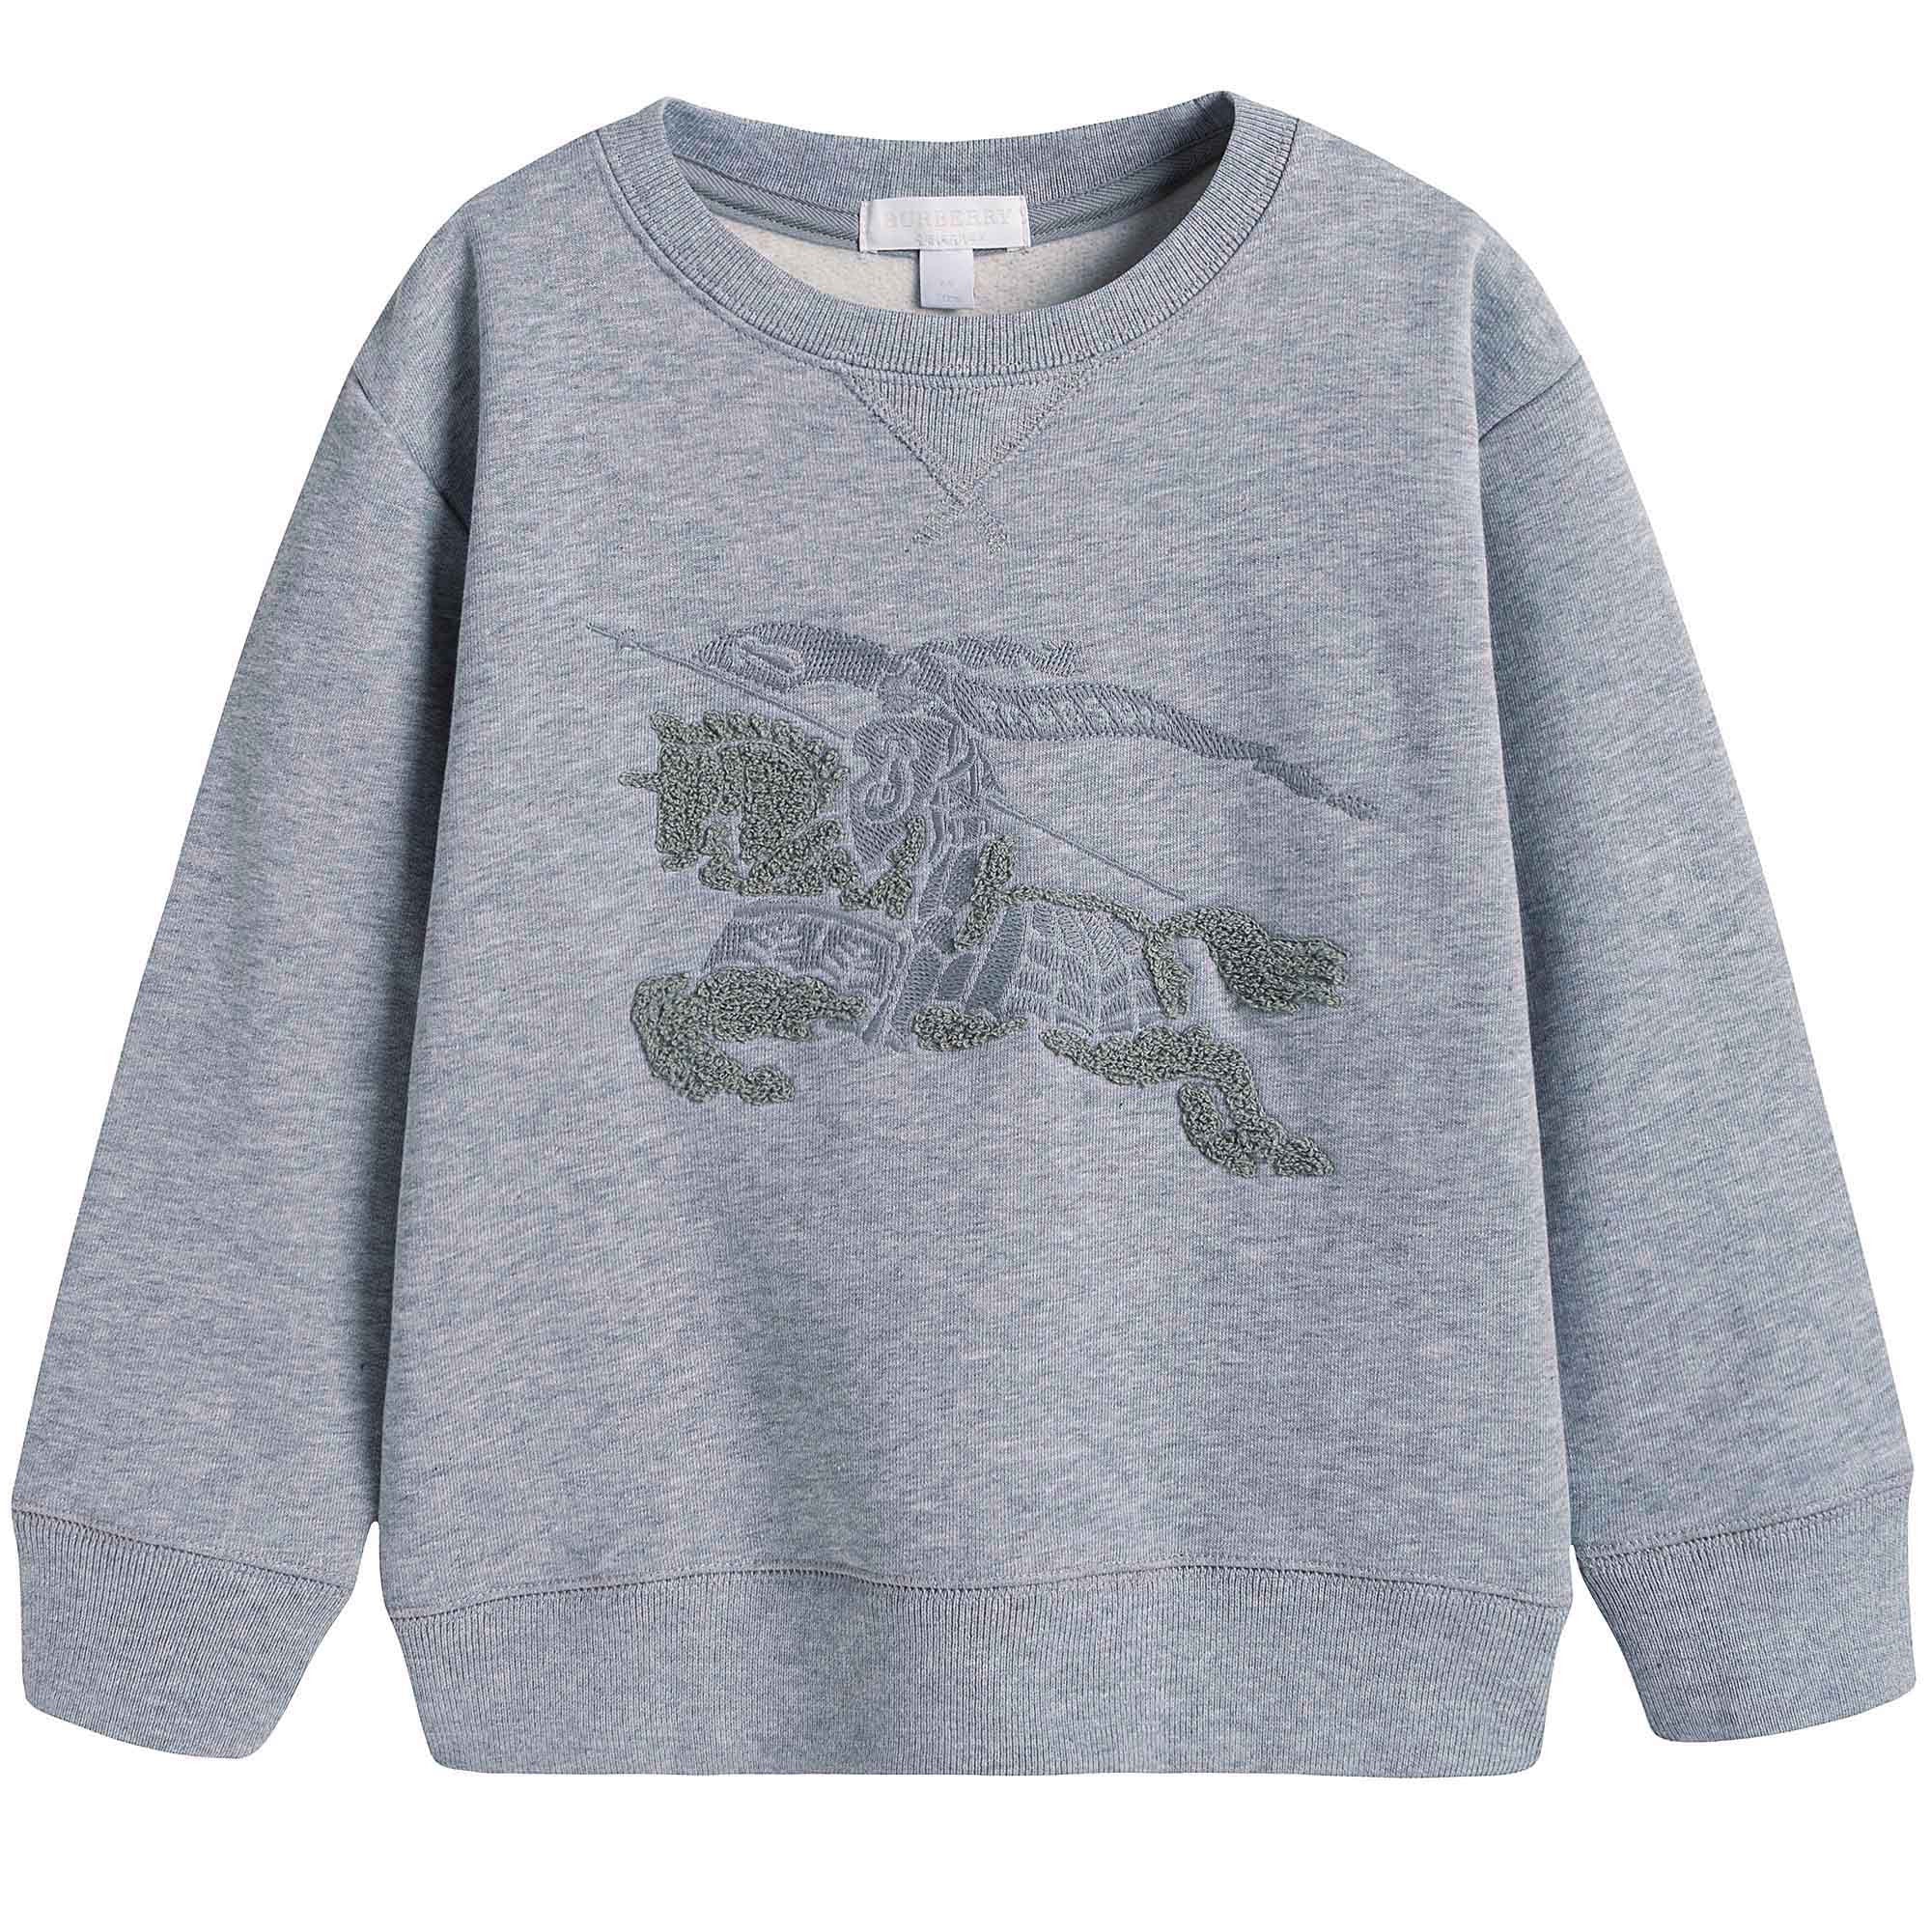 Boys Grey Equestrian Knight Trims Sweatshirt - CÉMAROSE | Children's Fashion Store - 1